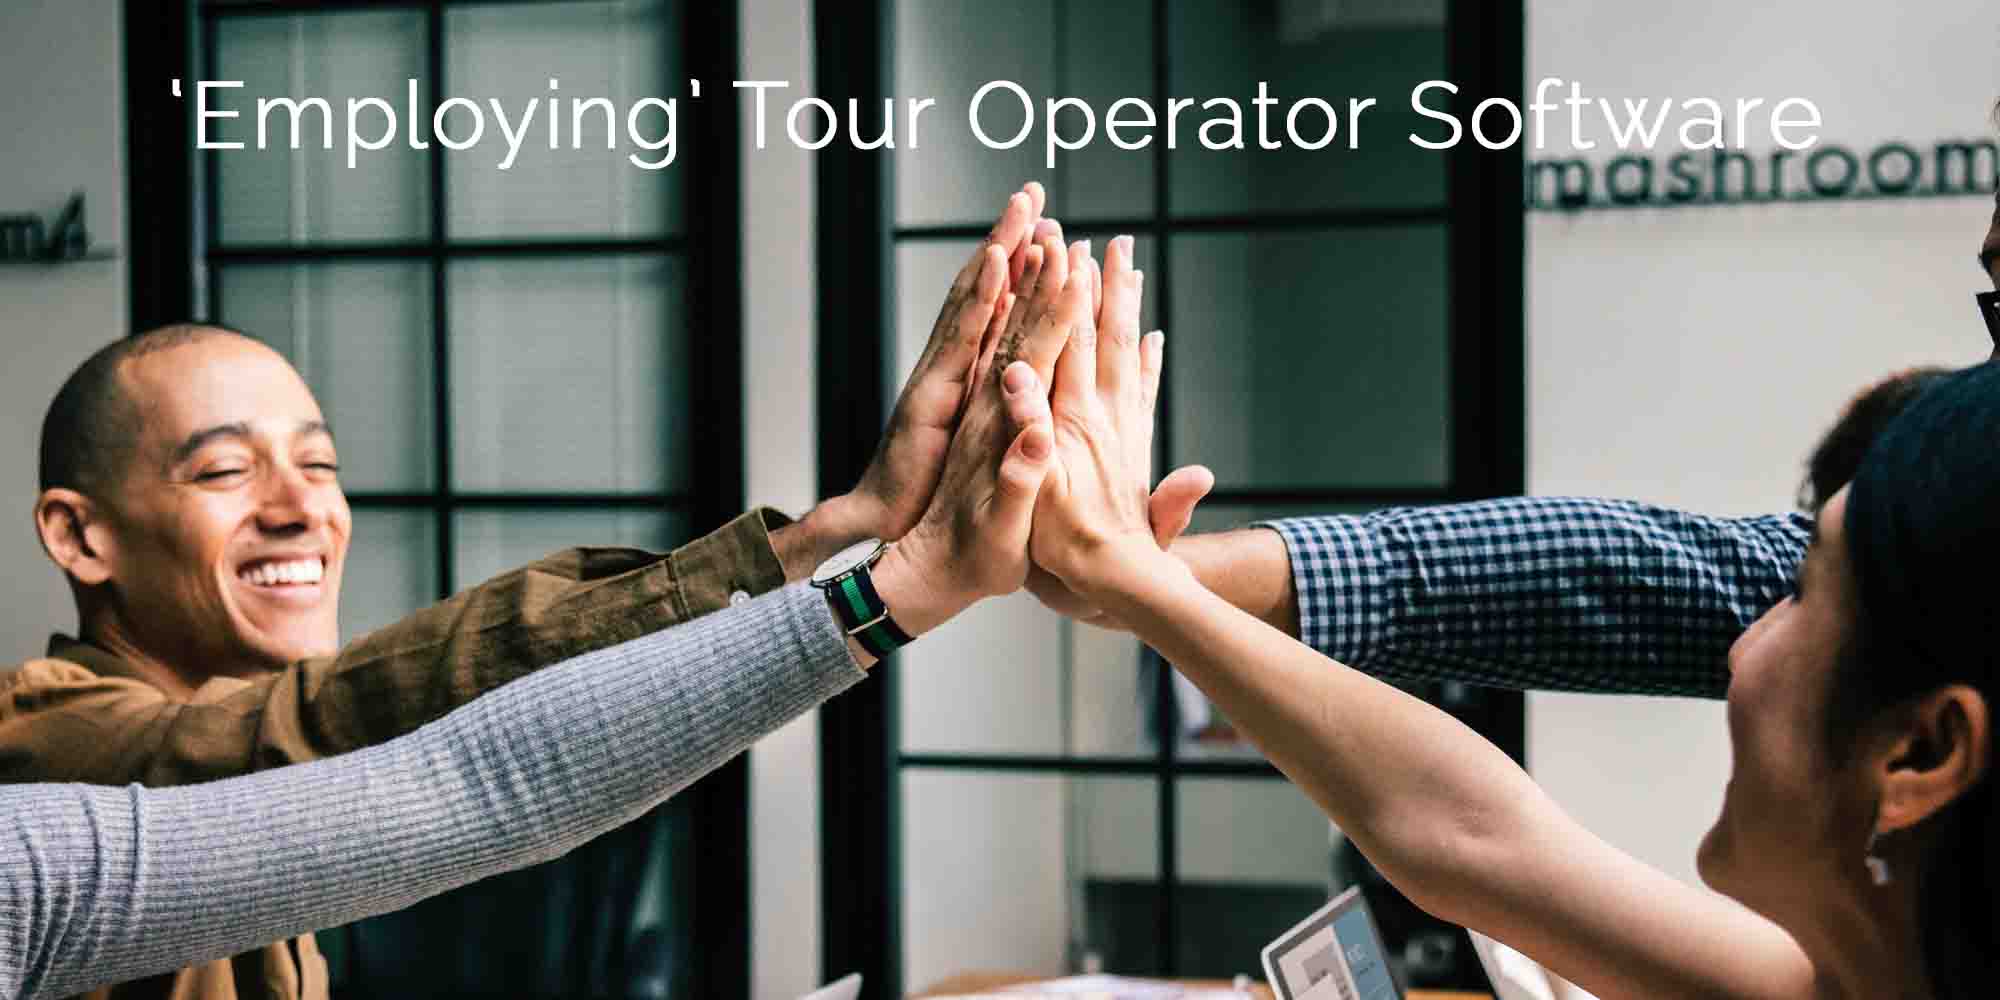 Employing Tour Operator Software